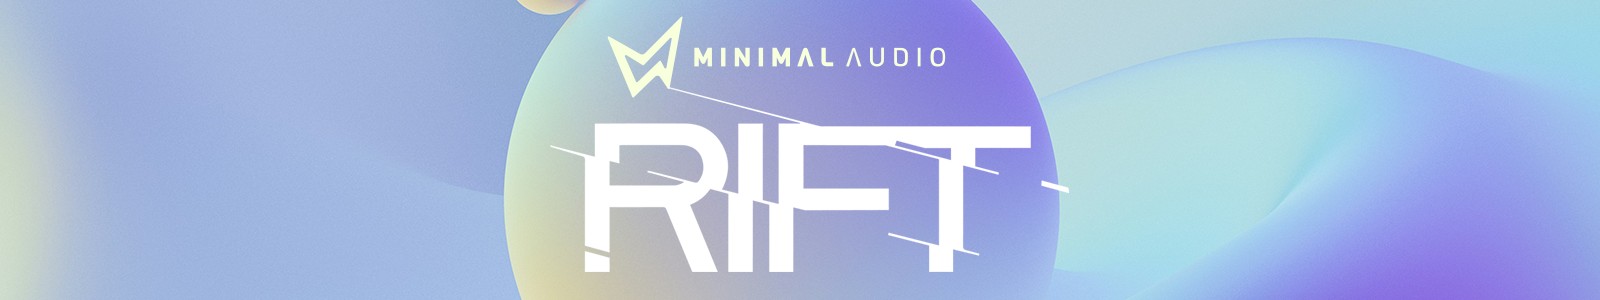 Rift by Minimal Audio